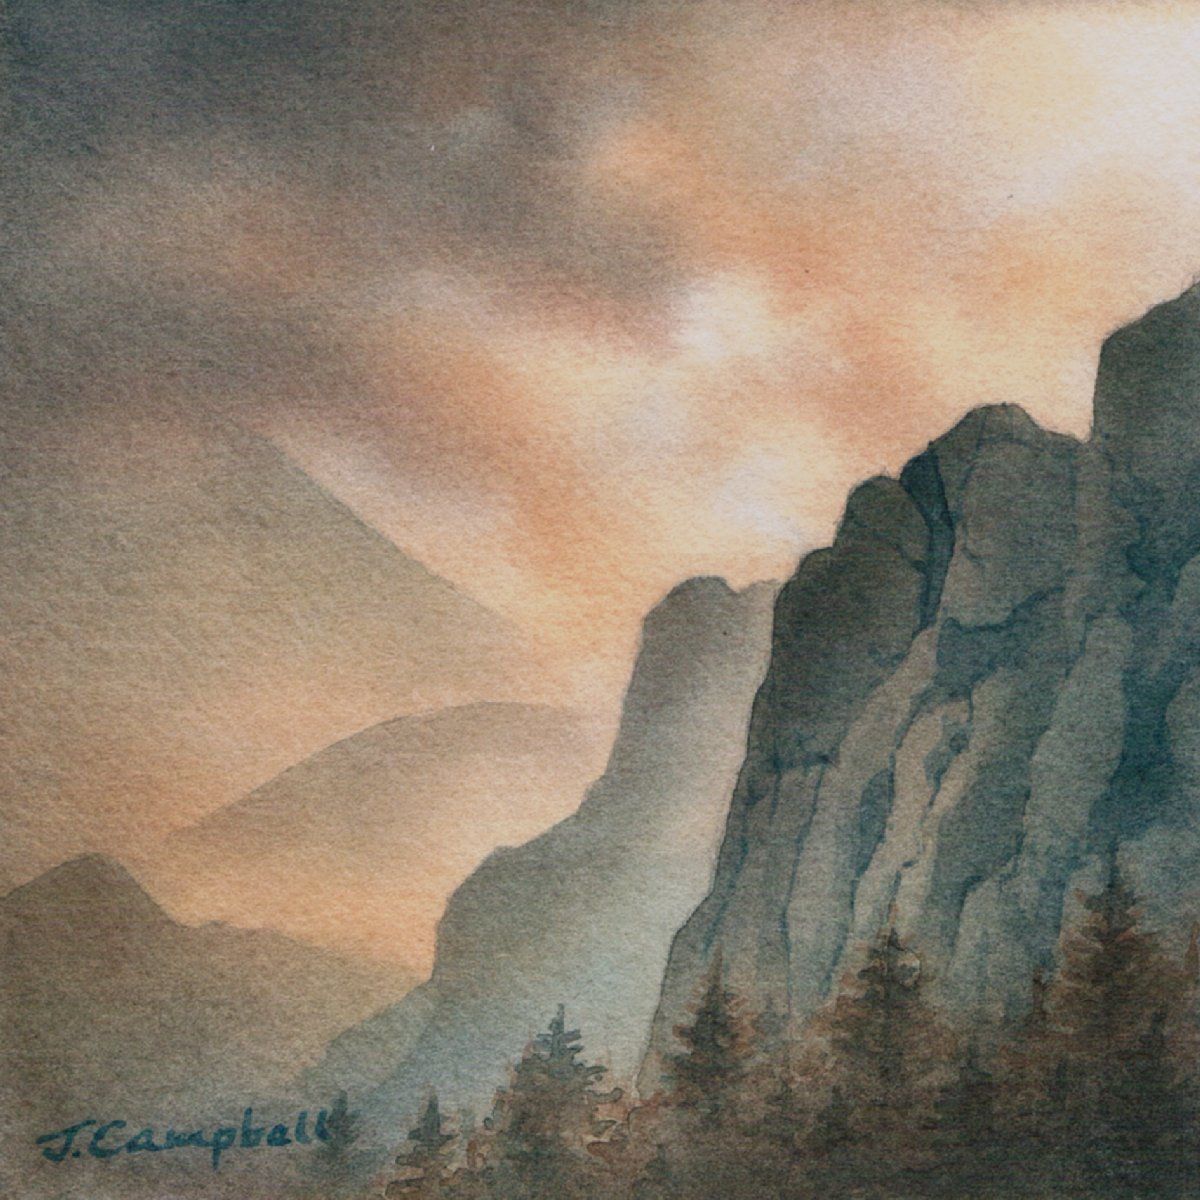 Gouder Crag, Borrowdale by John Campbell